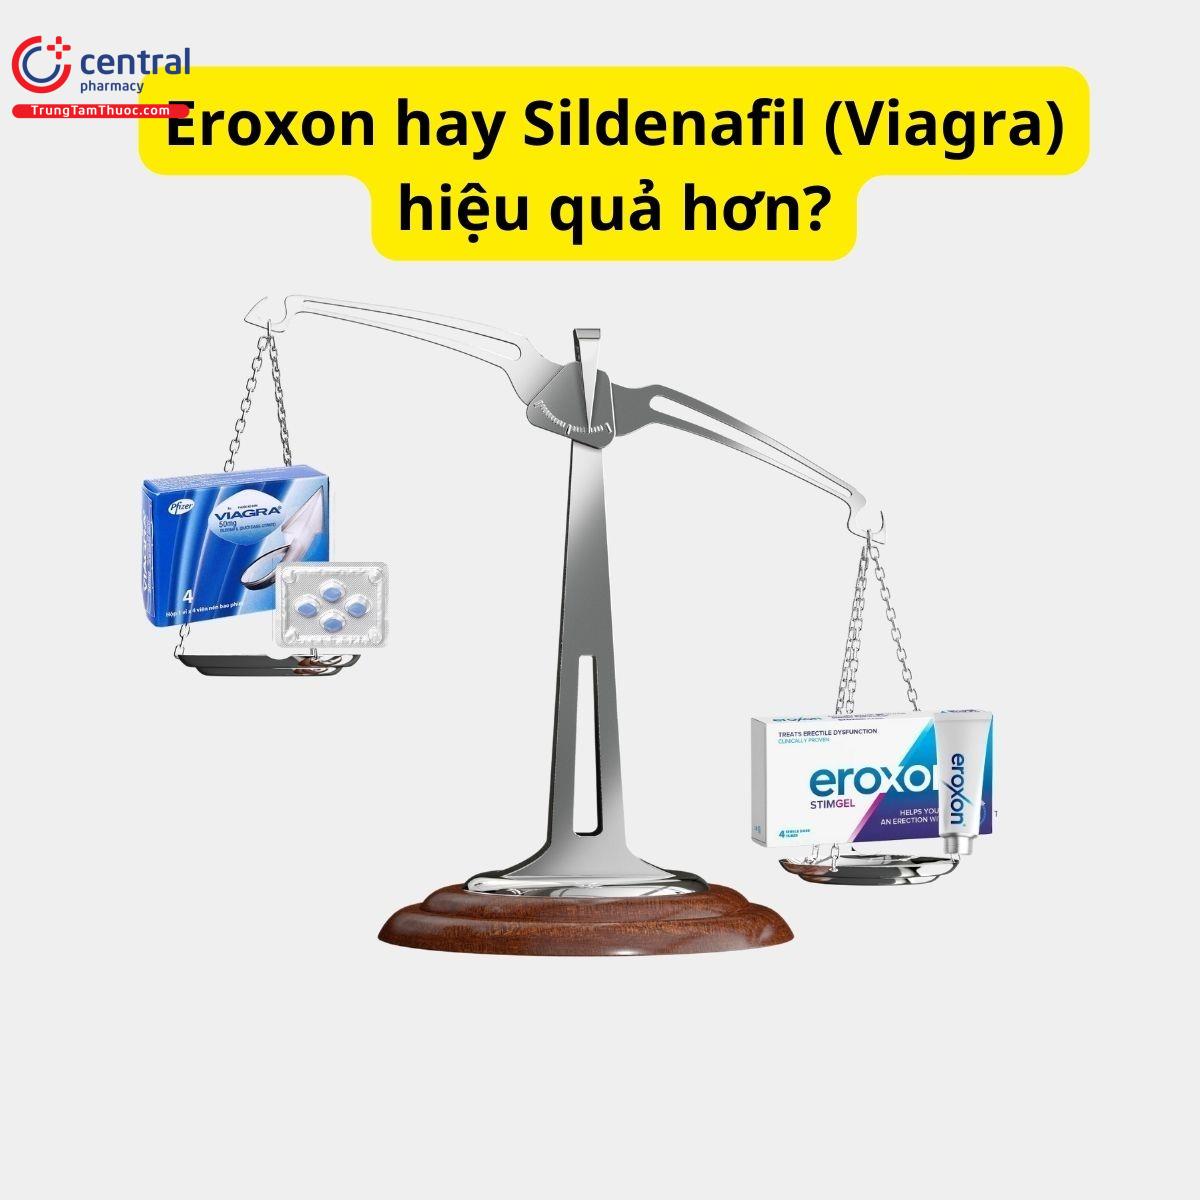 Eroxon hay Sildenafil (Viagra) hiệu quả hơn?